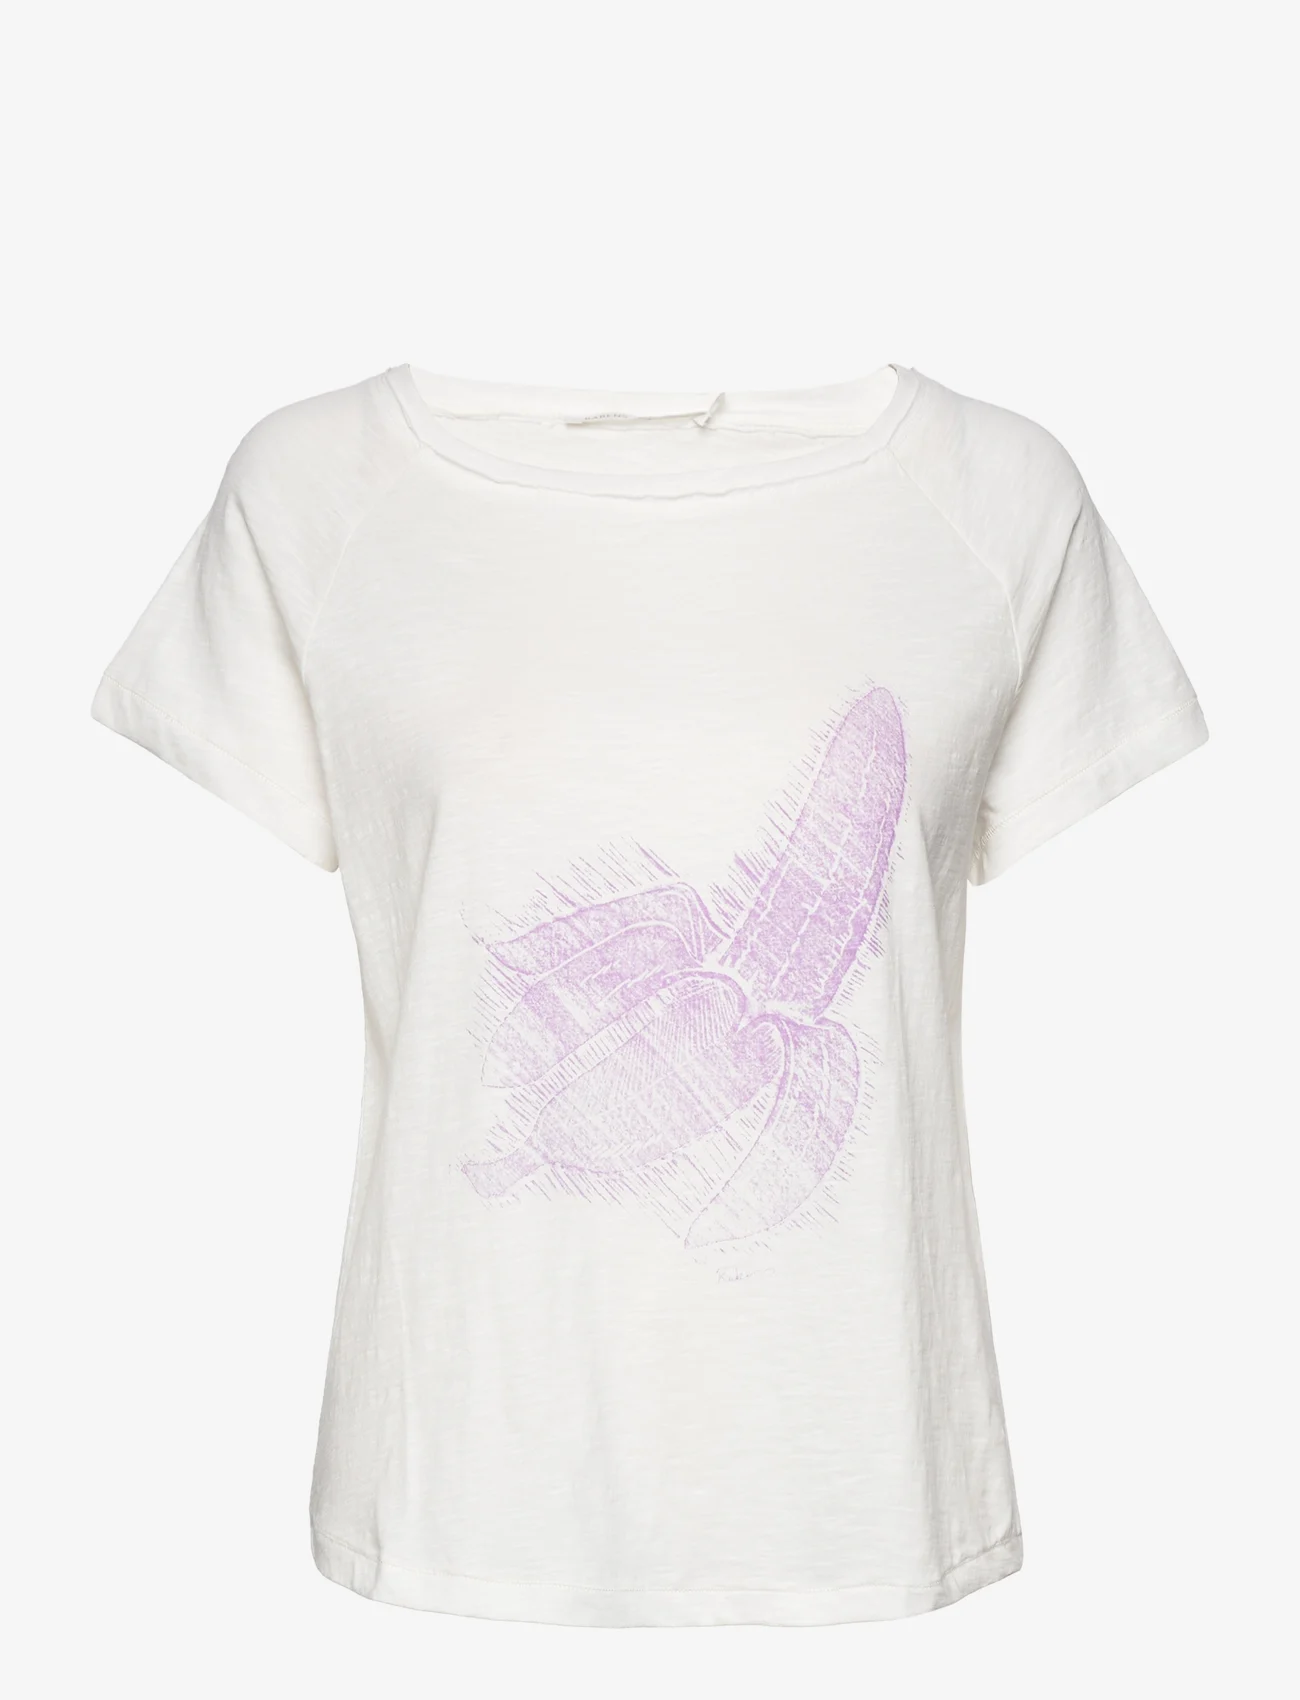 Rabens Saloner - Sally - t-shirts - lilac - 0